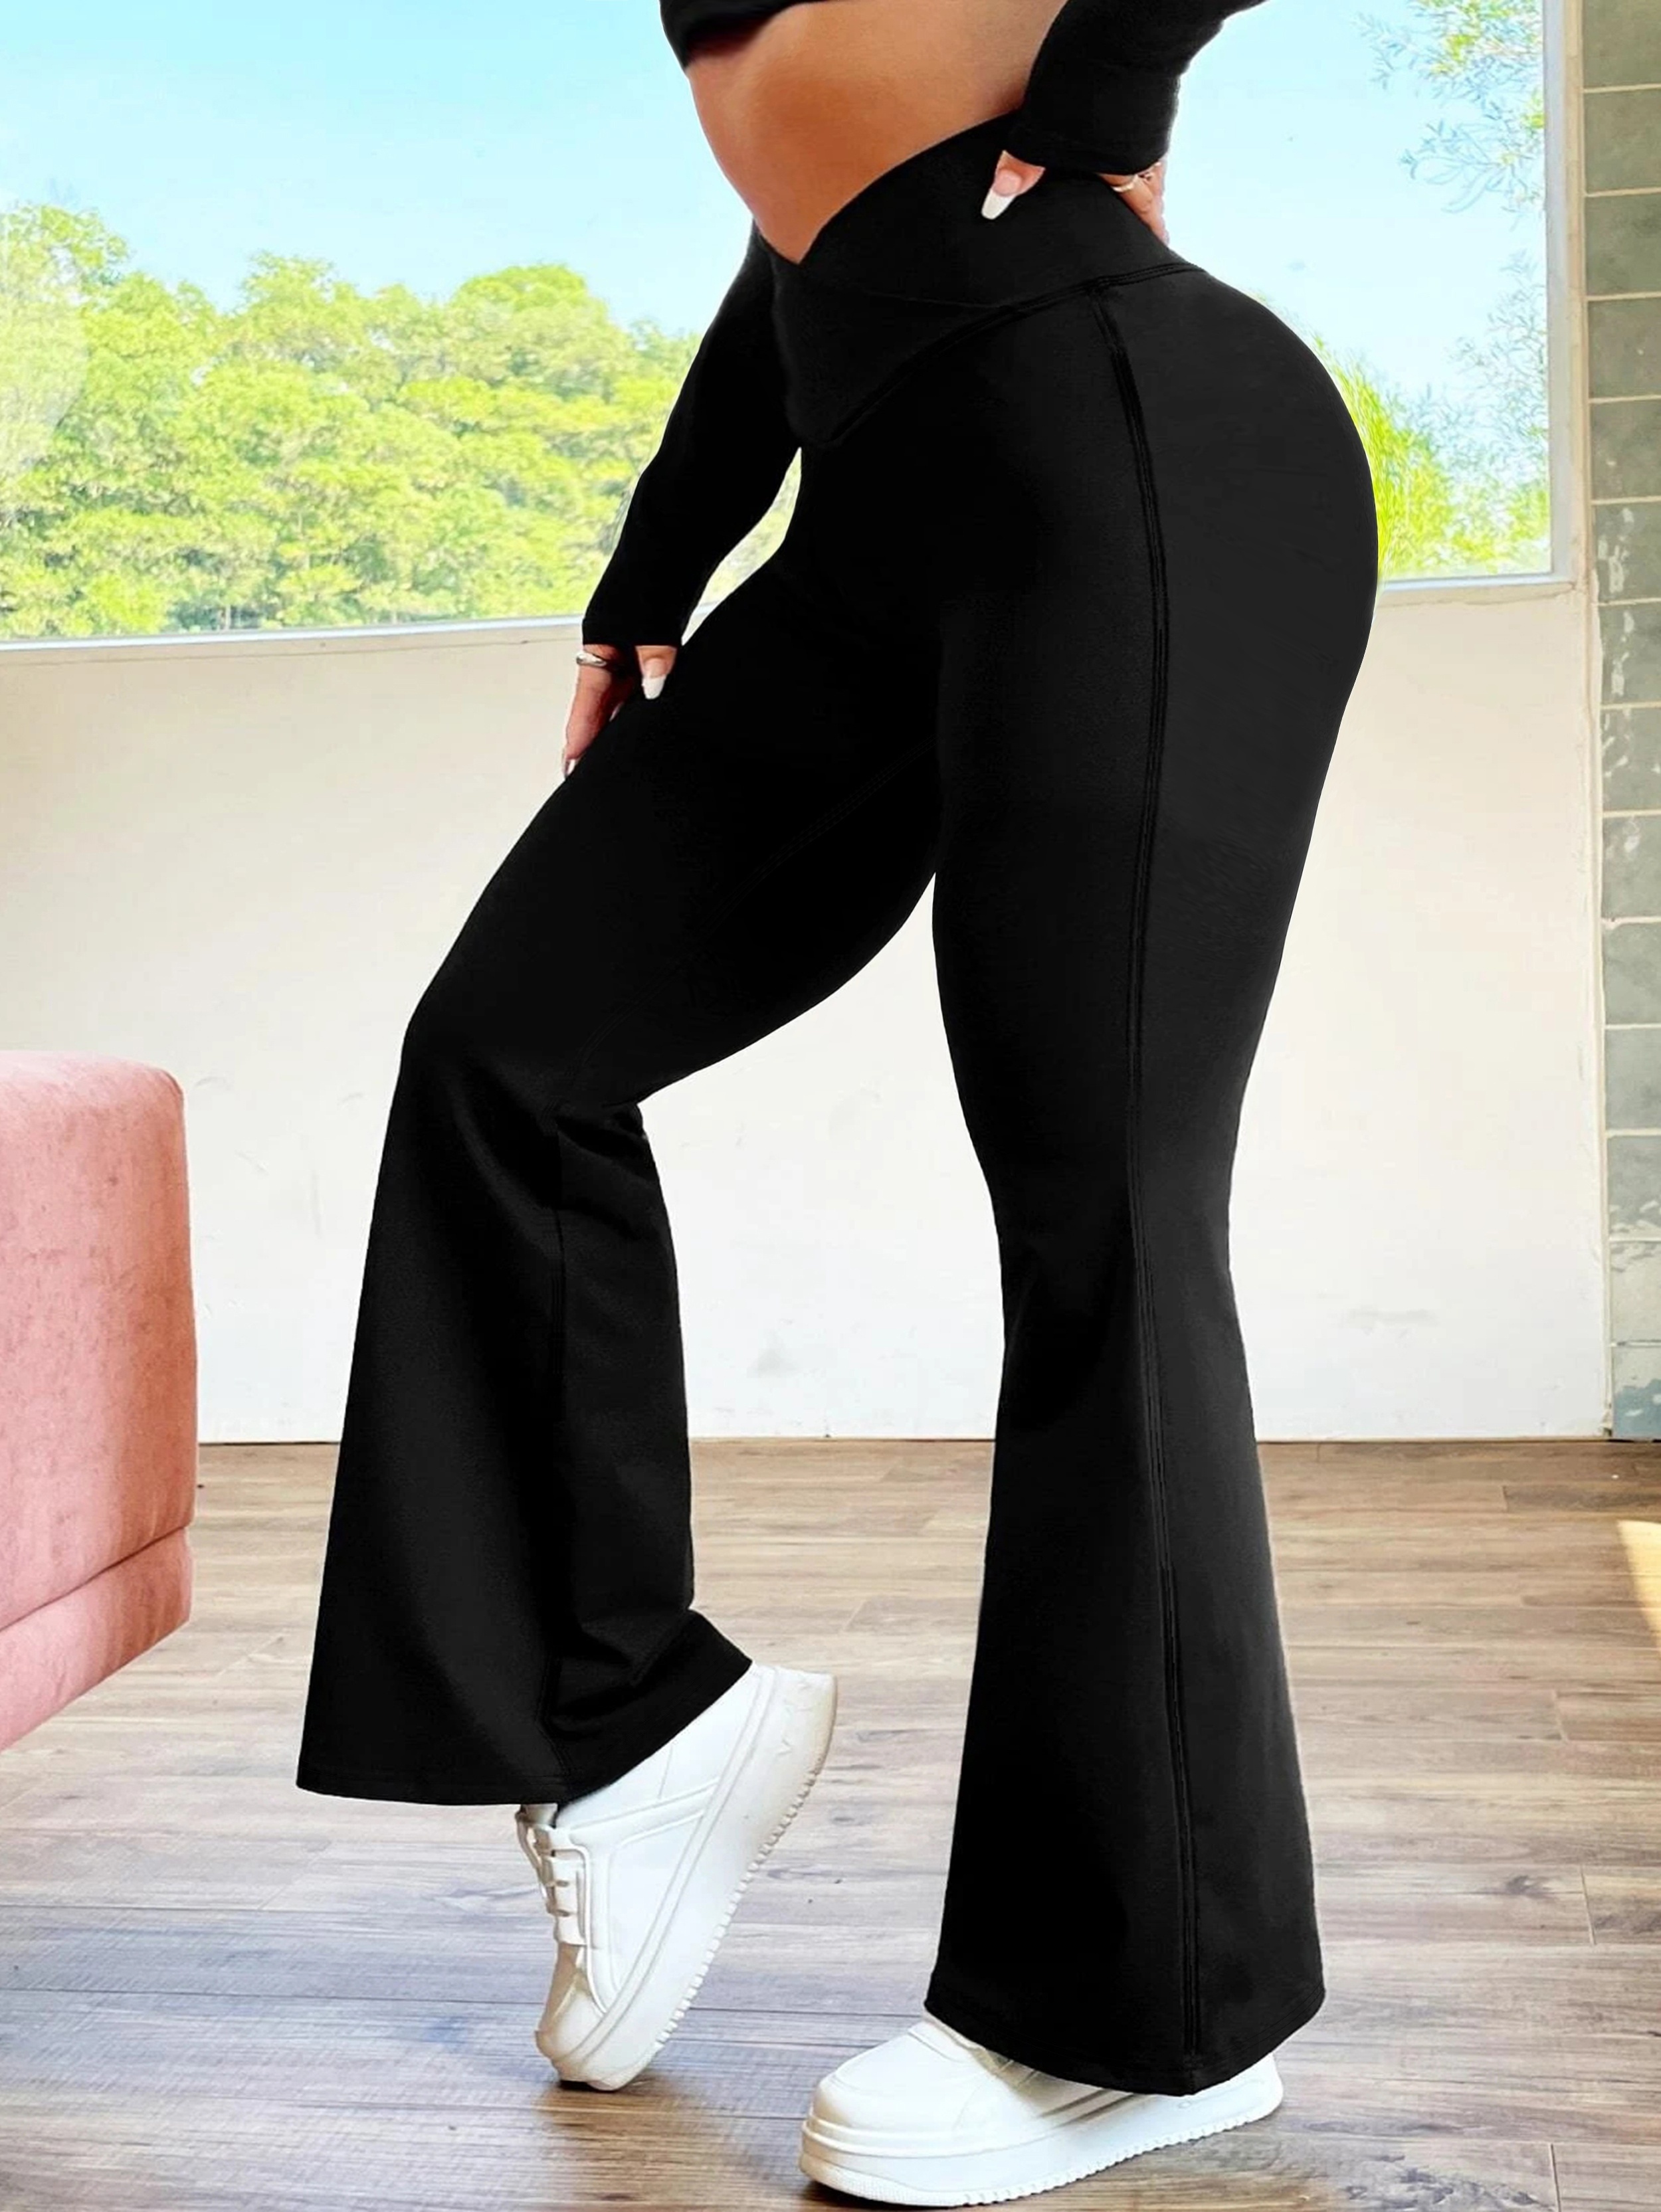 Women Crossover Split Pants Bootcut Yoga Pants High Waisted Full Length  Flare Workout Pants Bootleg Leggings With Pockets - Pants & Capris -  AliExpress